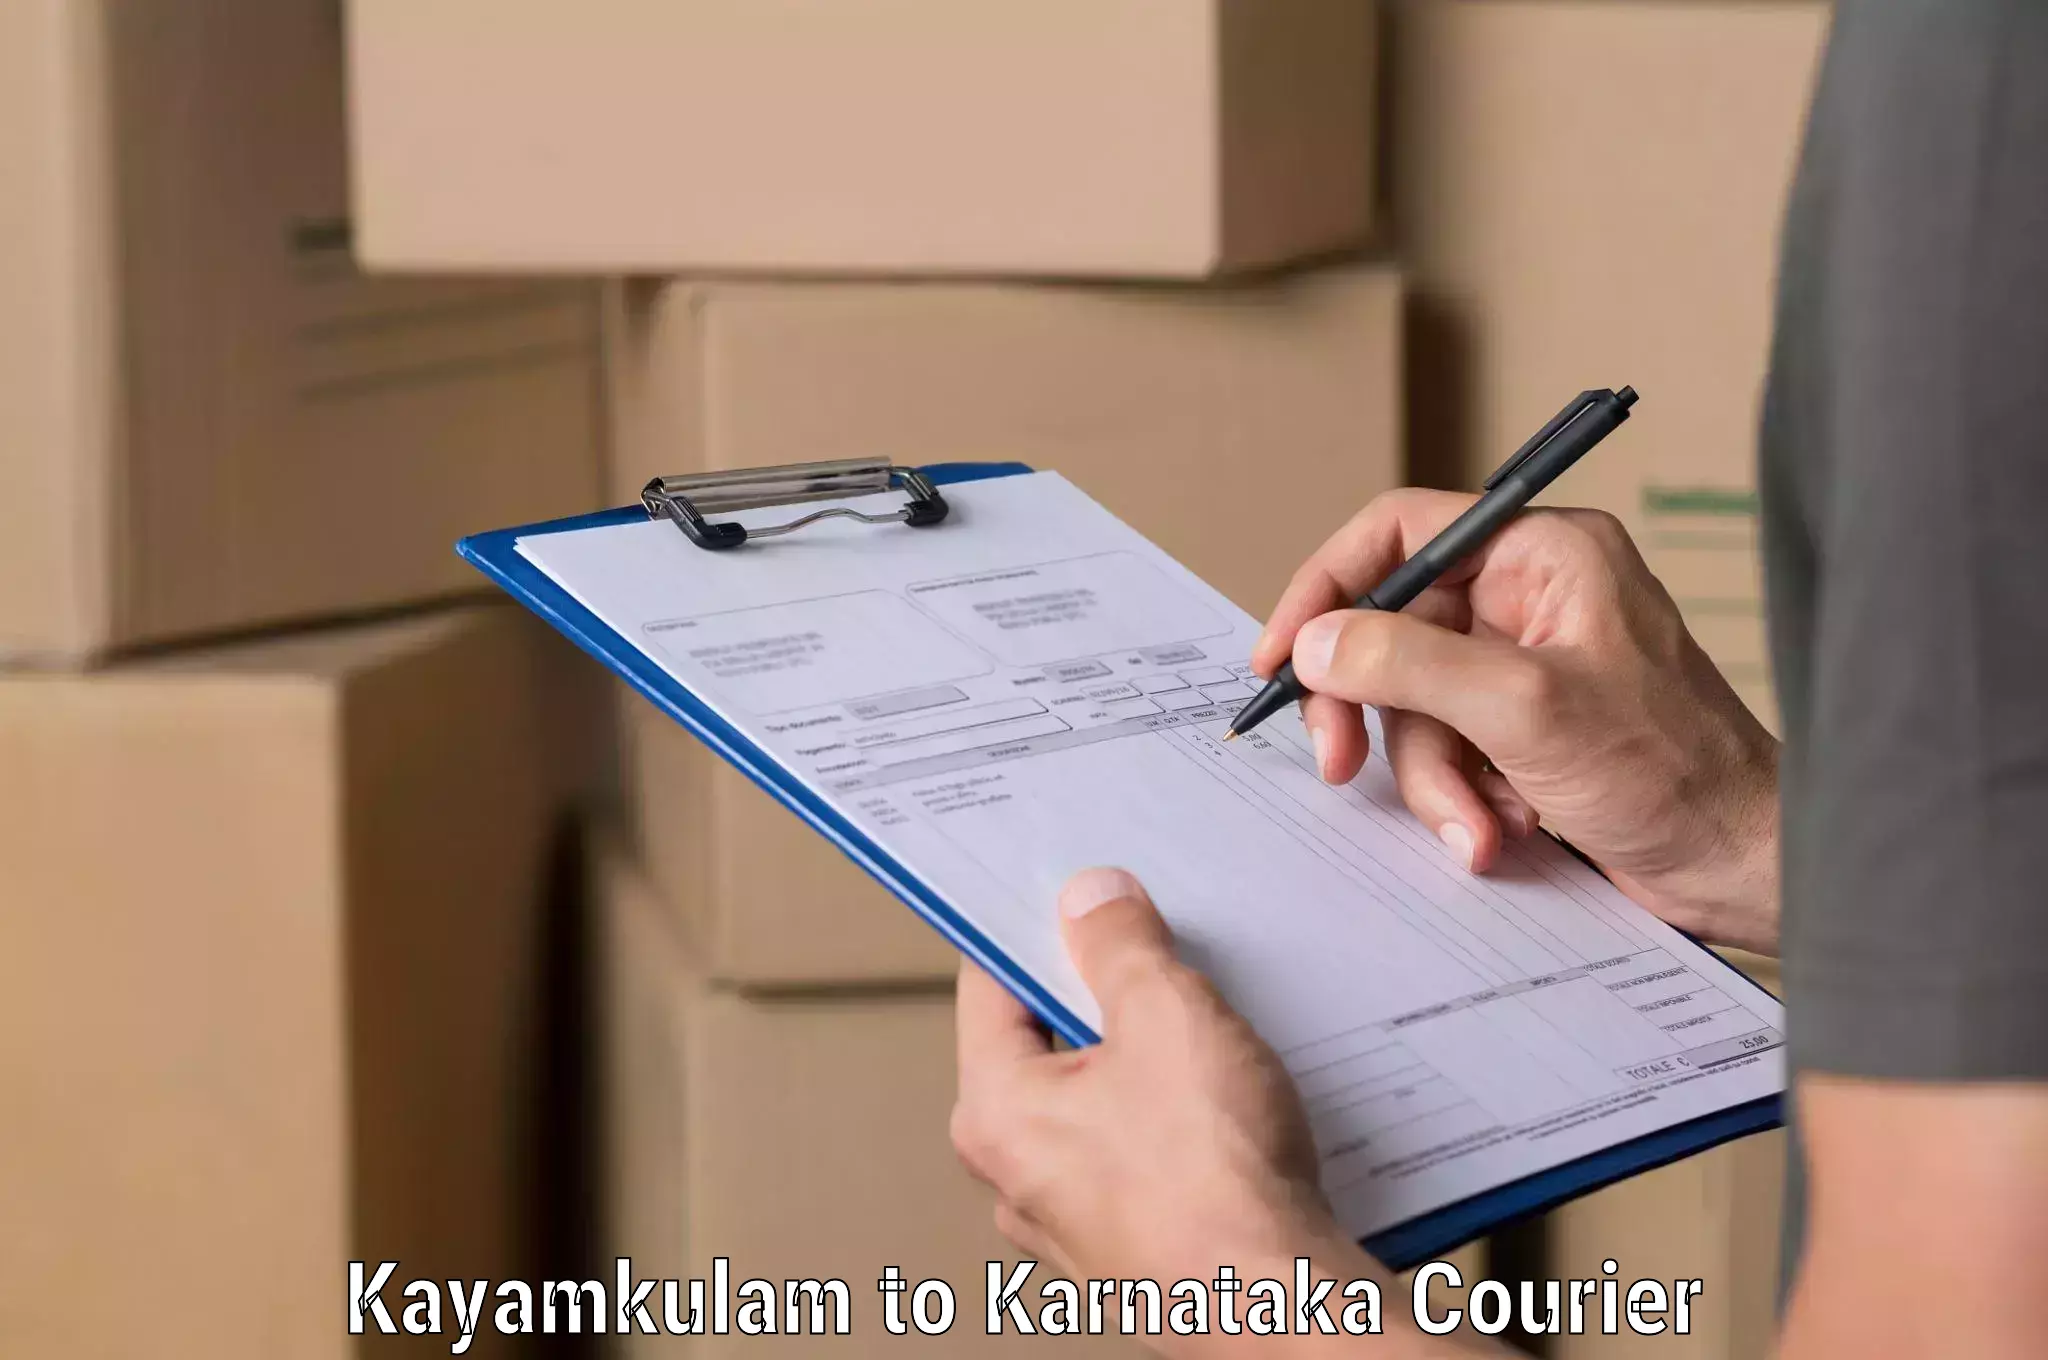 Advanced delivery network Kayamkulam to Karnataka